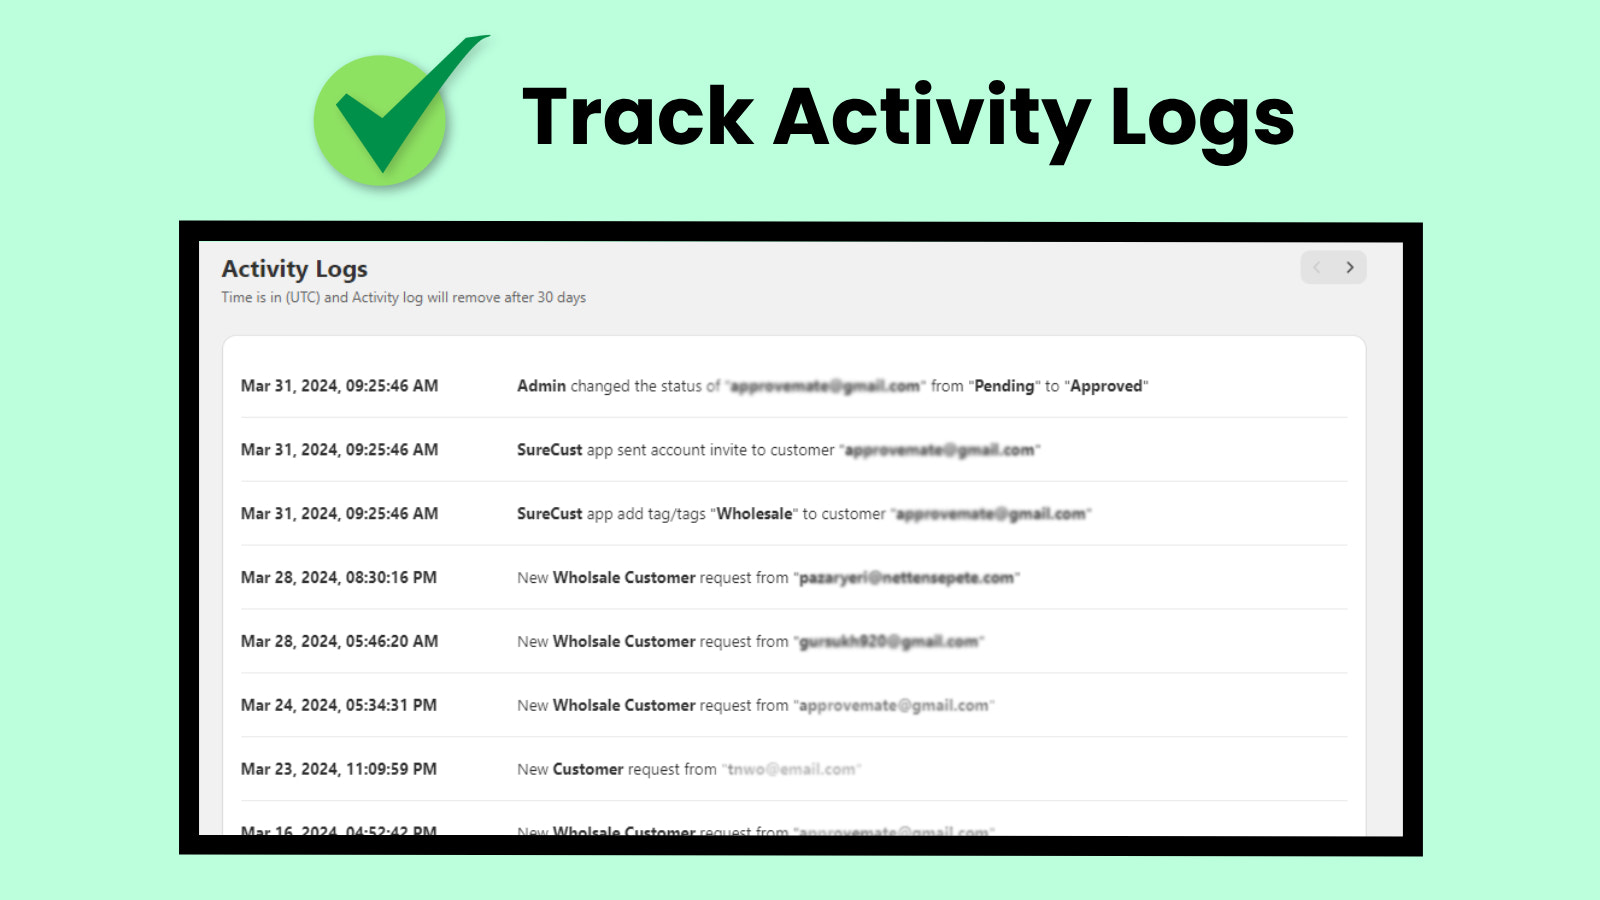 SureCust - Track Activity Logs